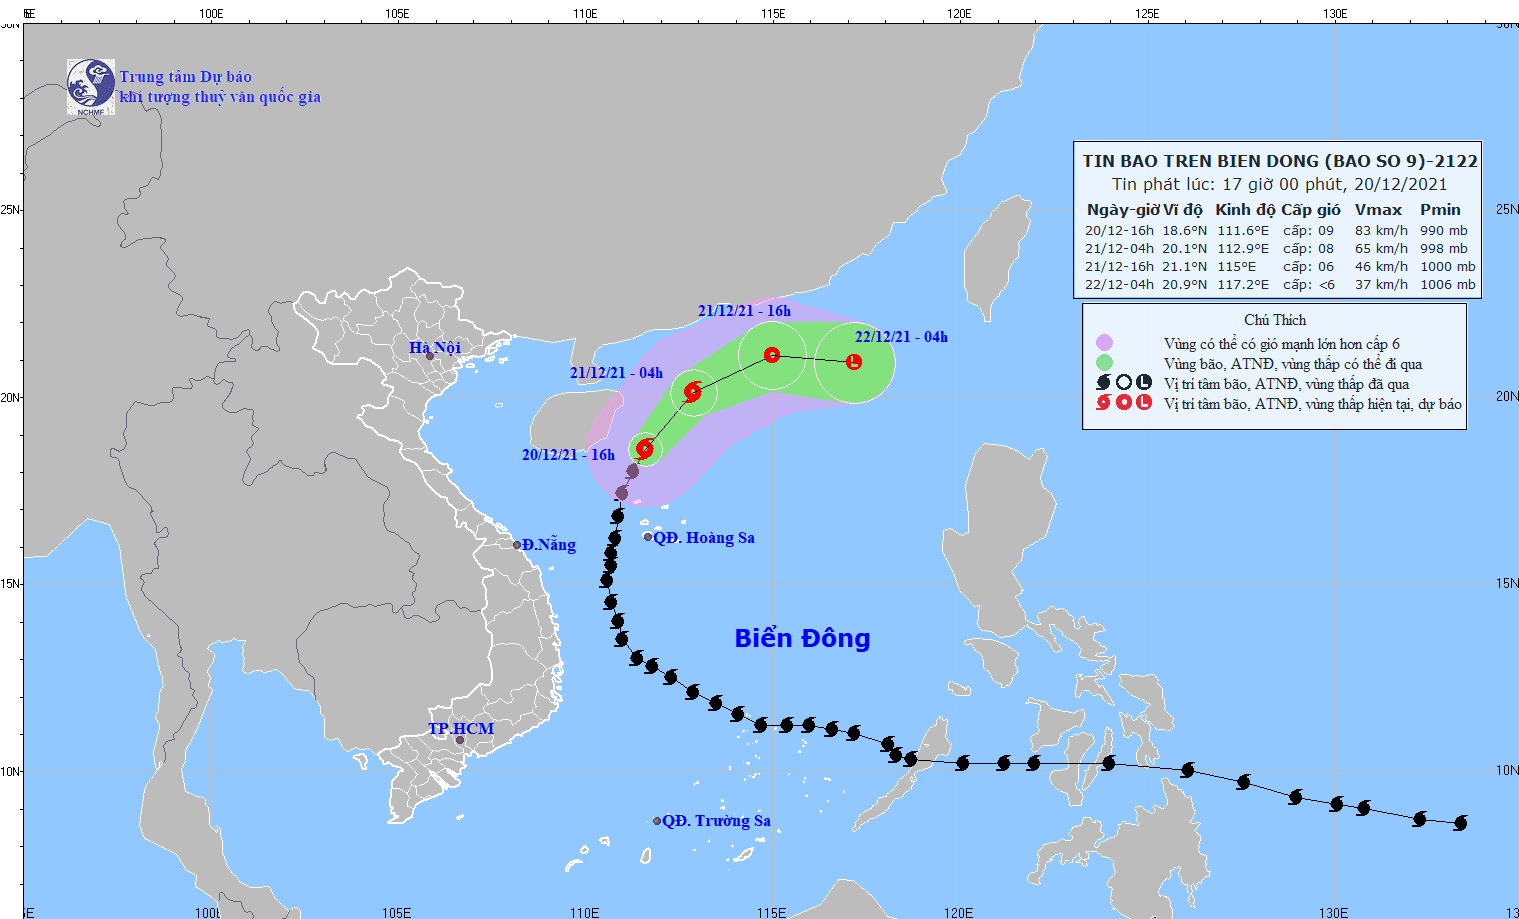 Typhoon Rai weakens into tropical depression, unable to affect Vietnam